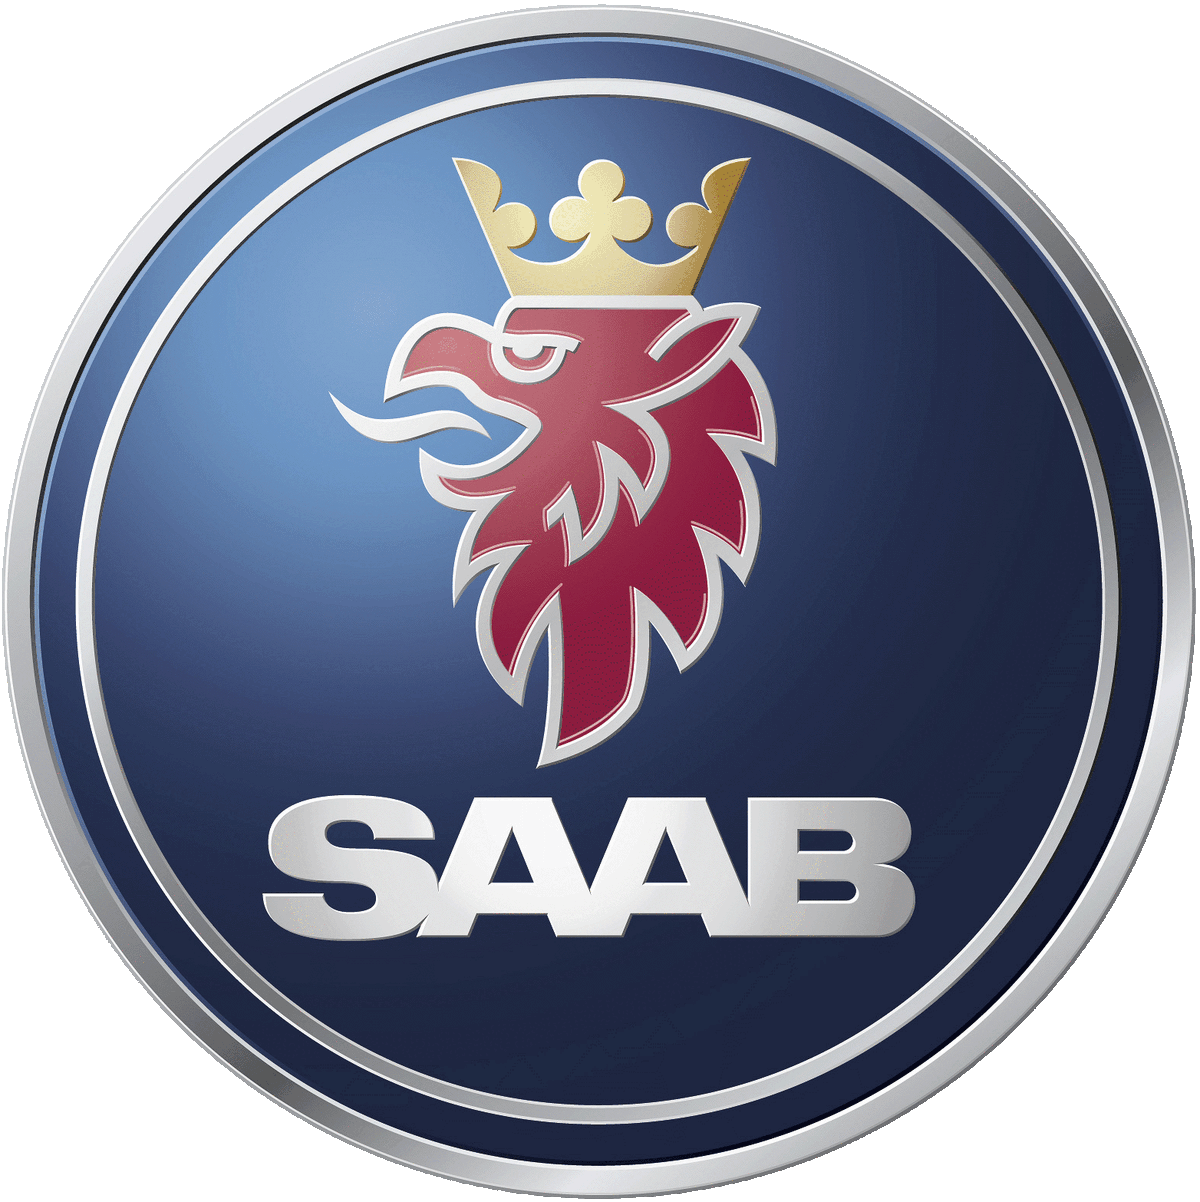 File:Brabus logo.svg - Wikipedia